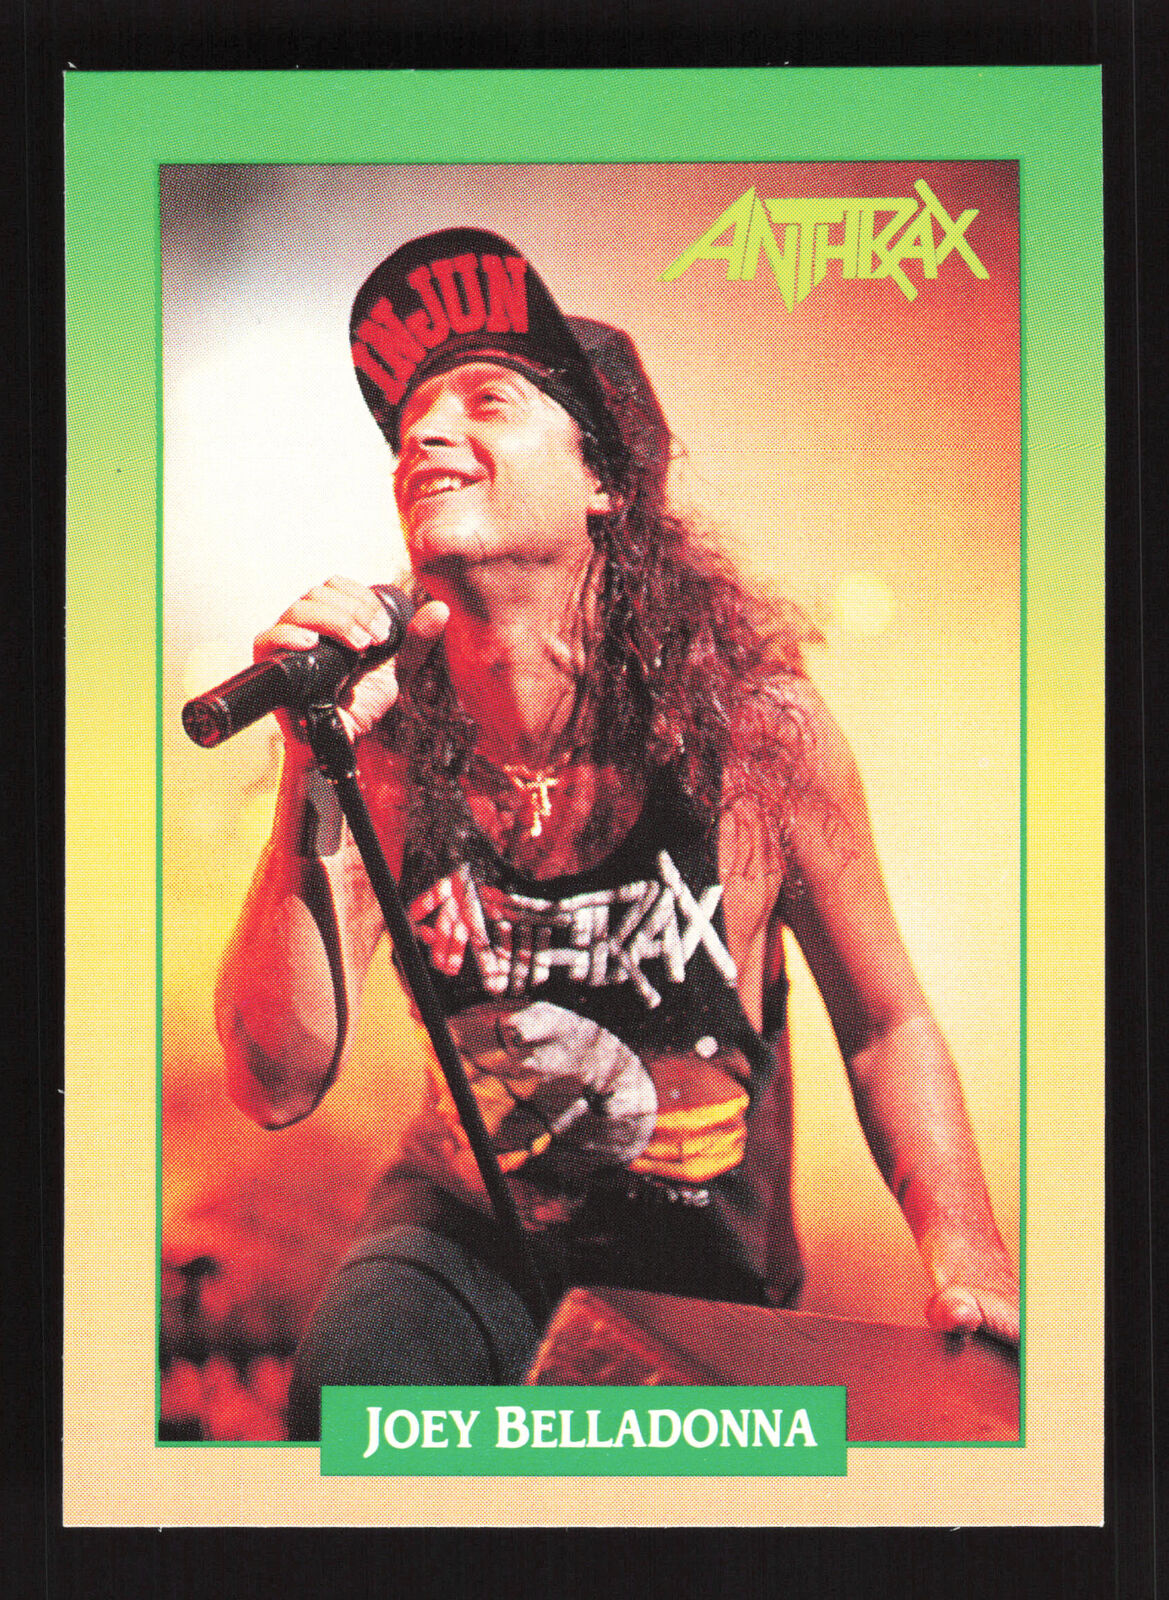 1991 Brockum Rock Cards #49 Joey Belladonna - Anthrax